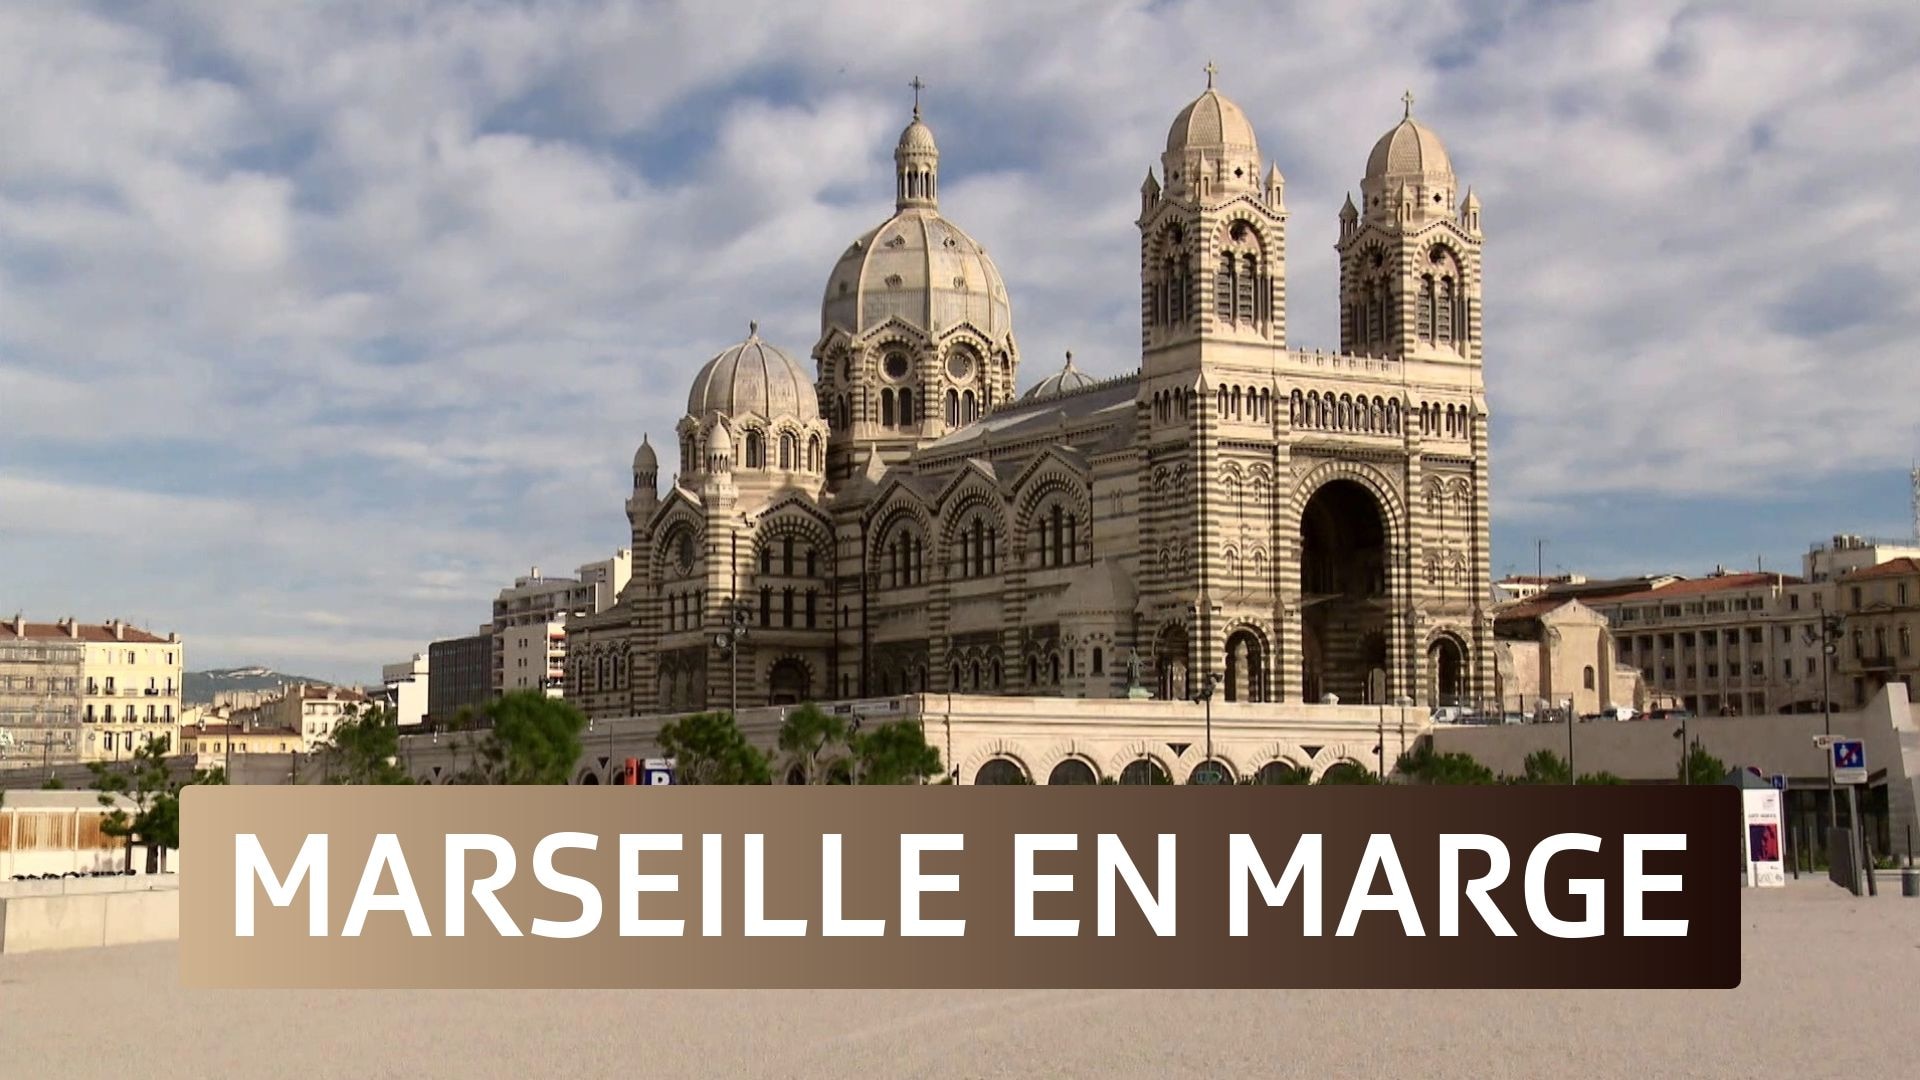 Marseille en marge